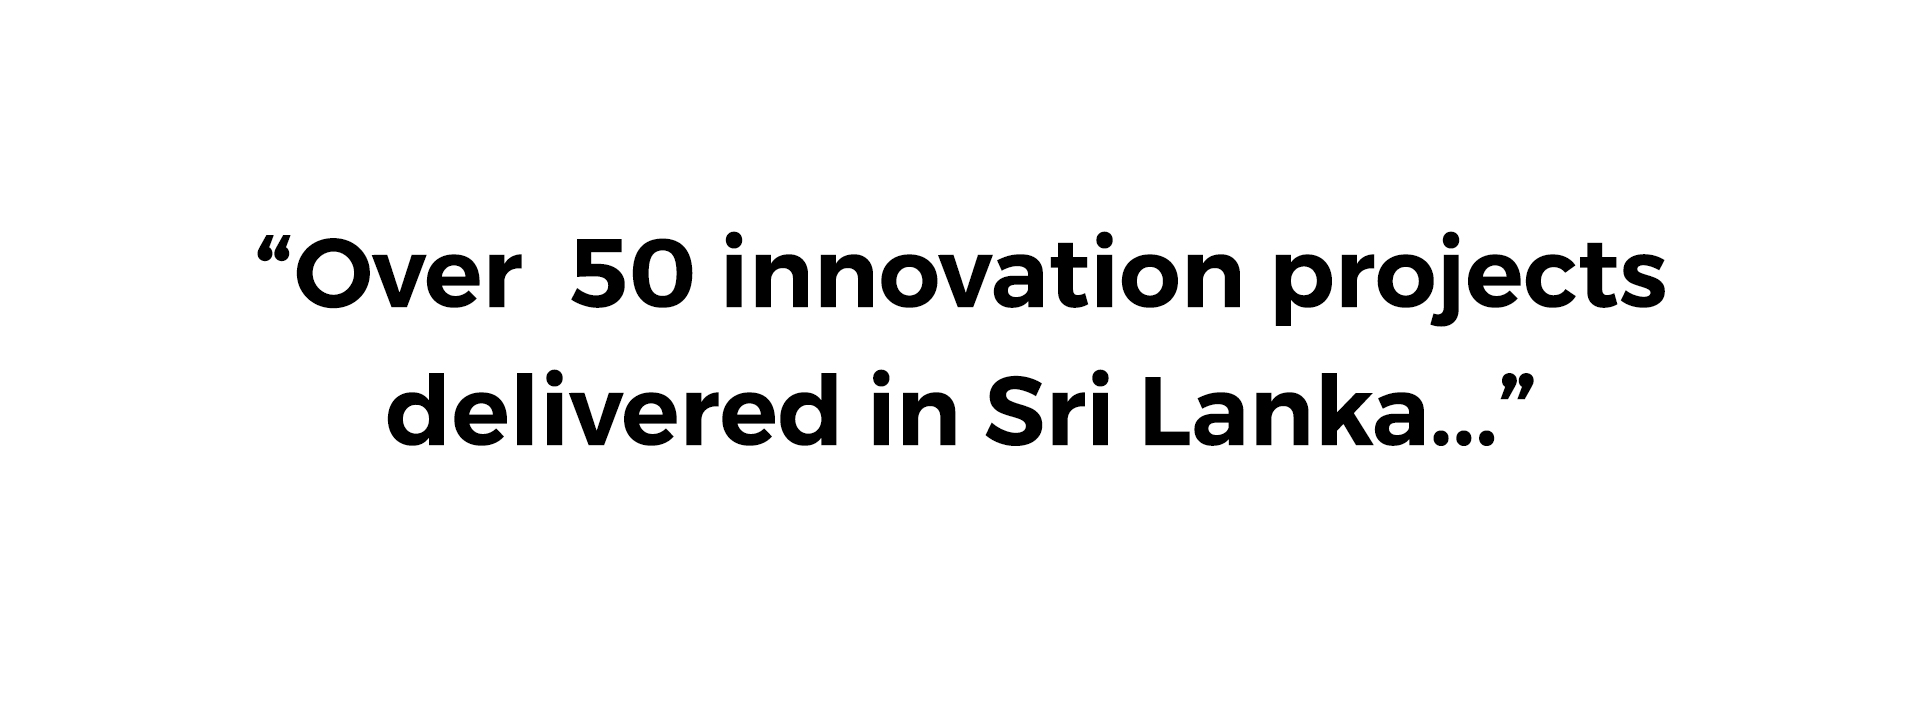 Over 50 innovation projects delivered in SriLanka